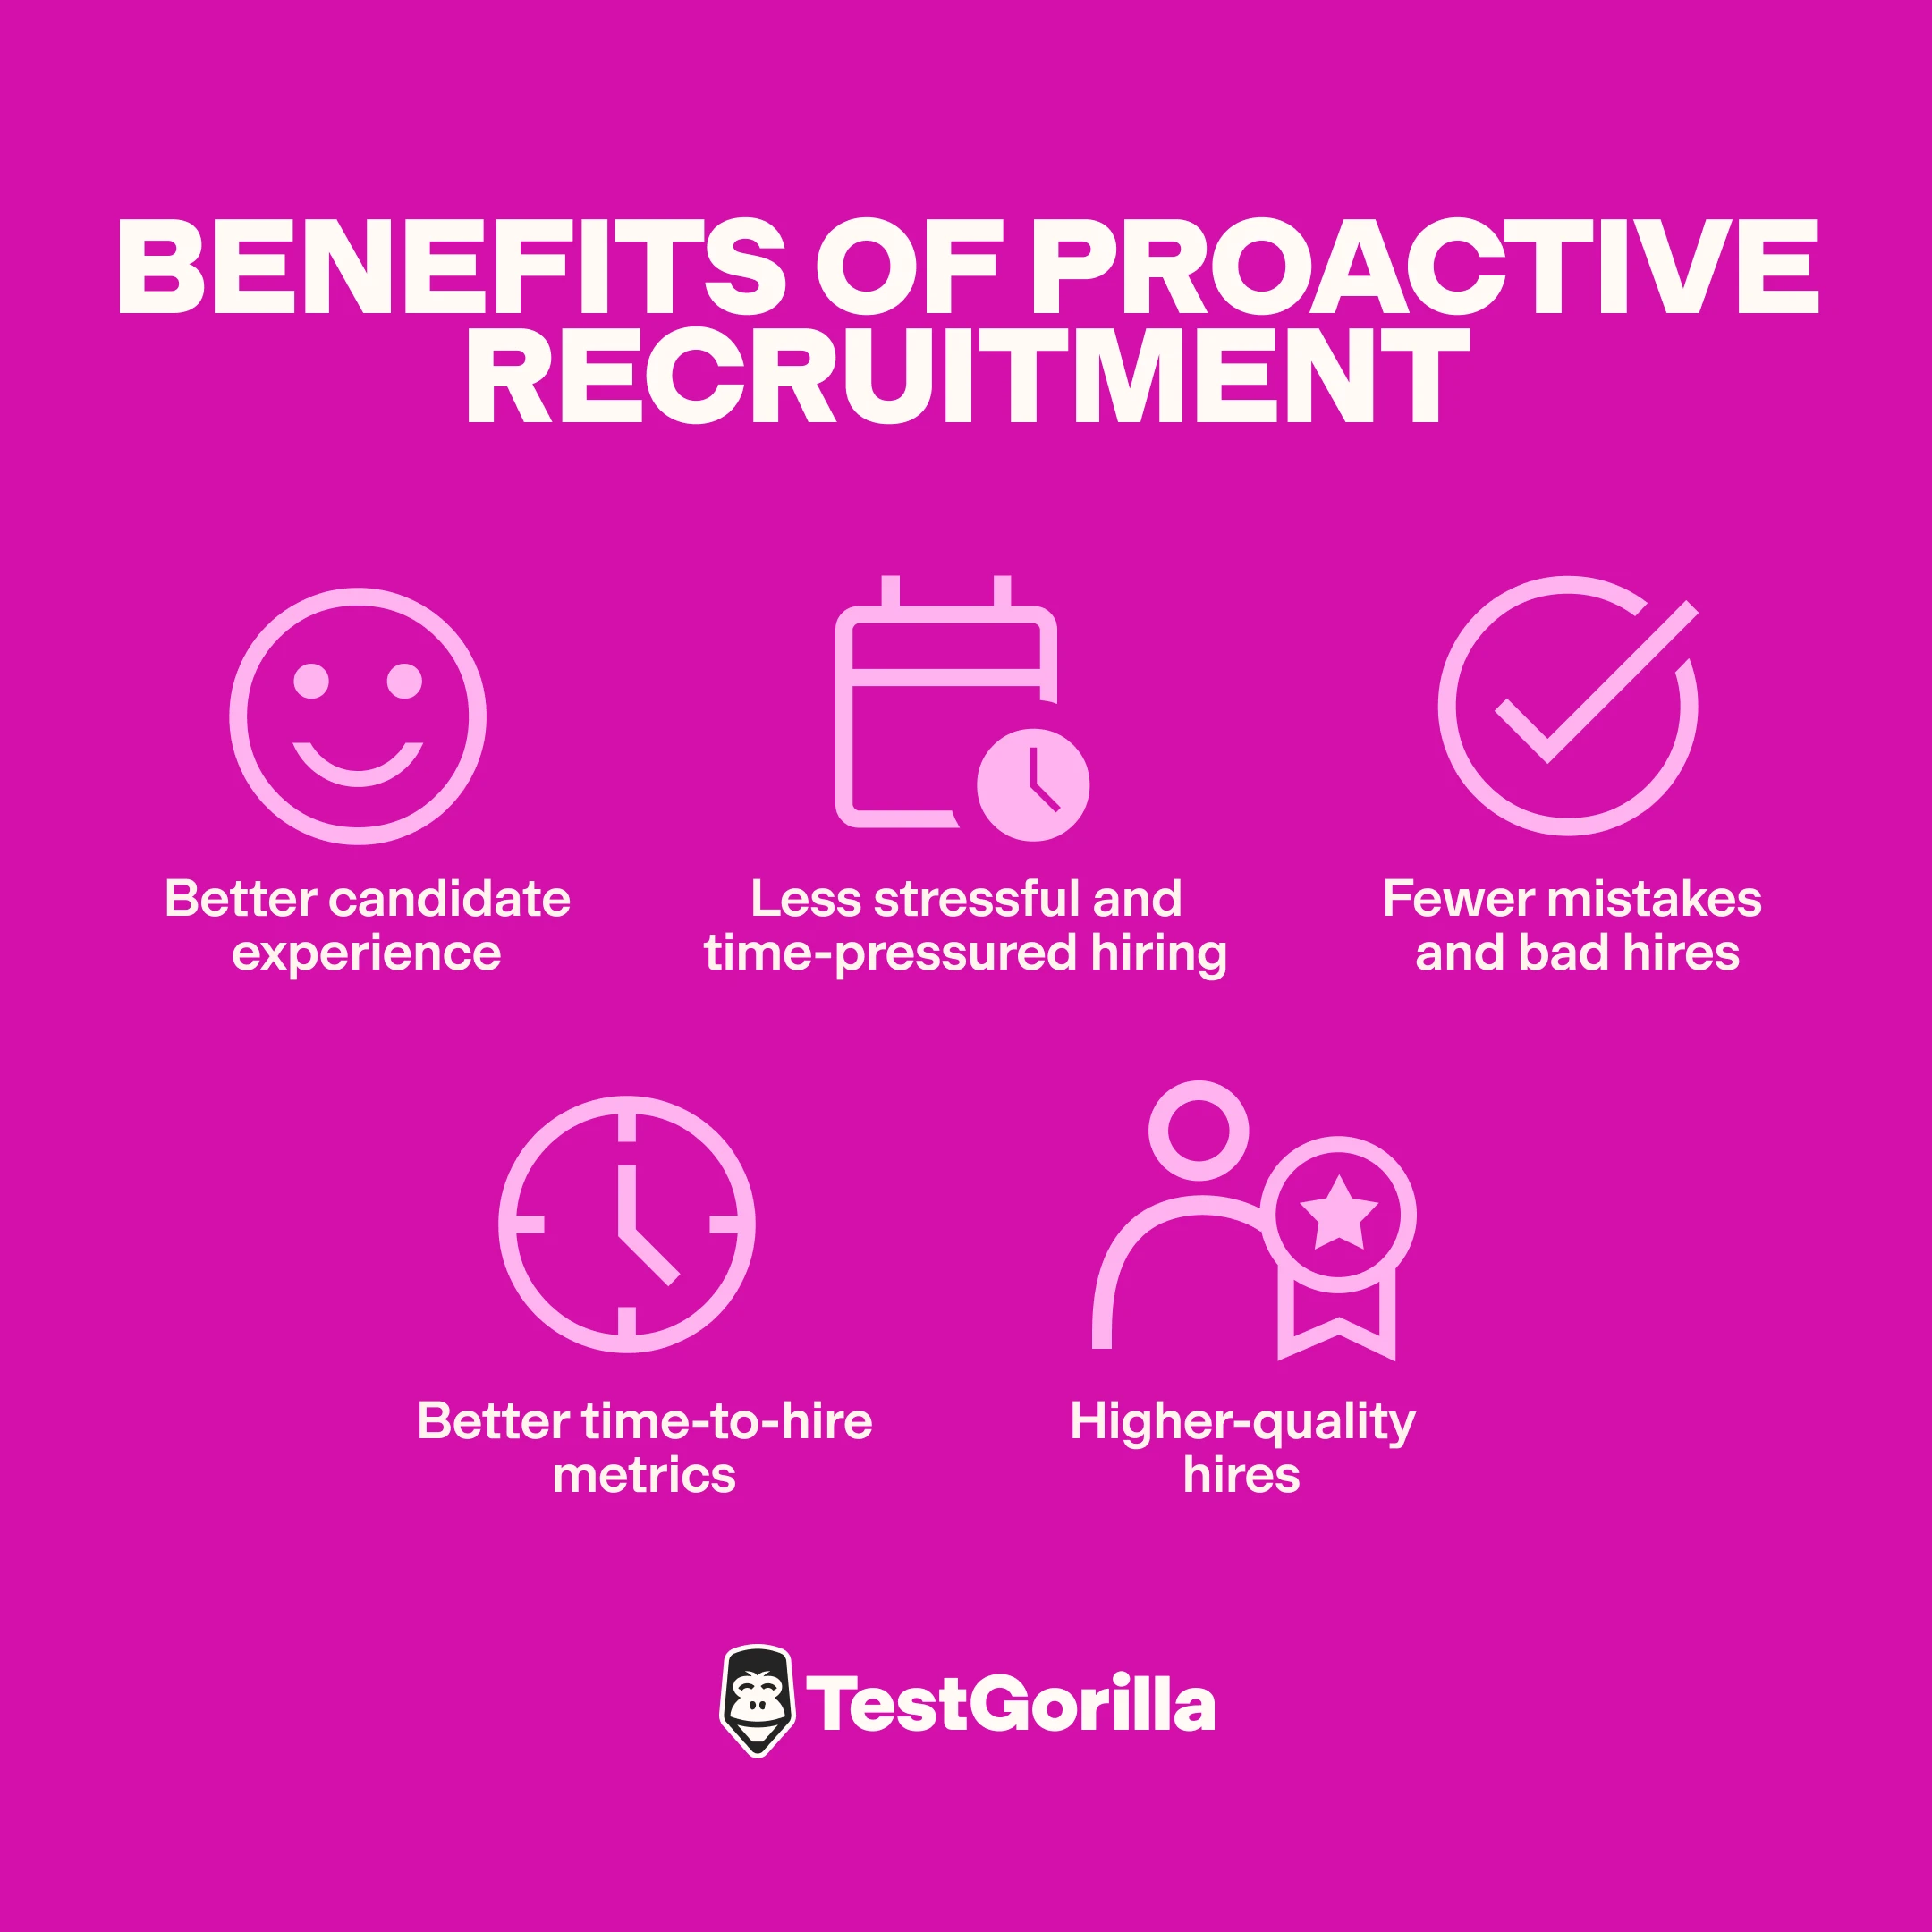 Benefits of proactive recruitment